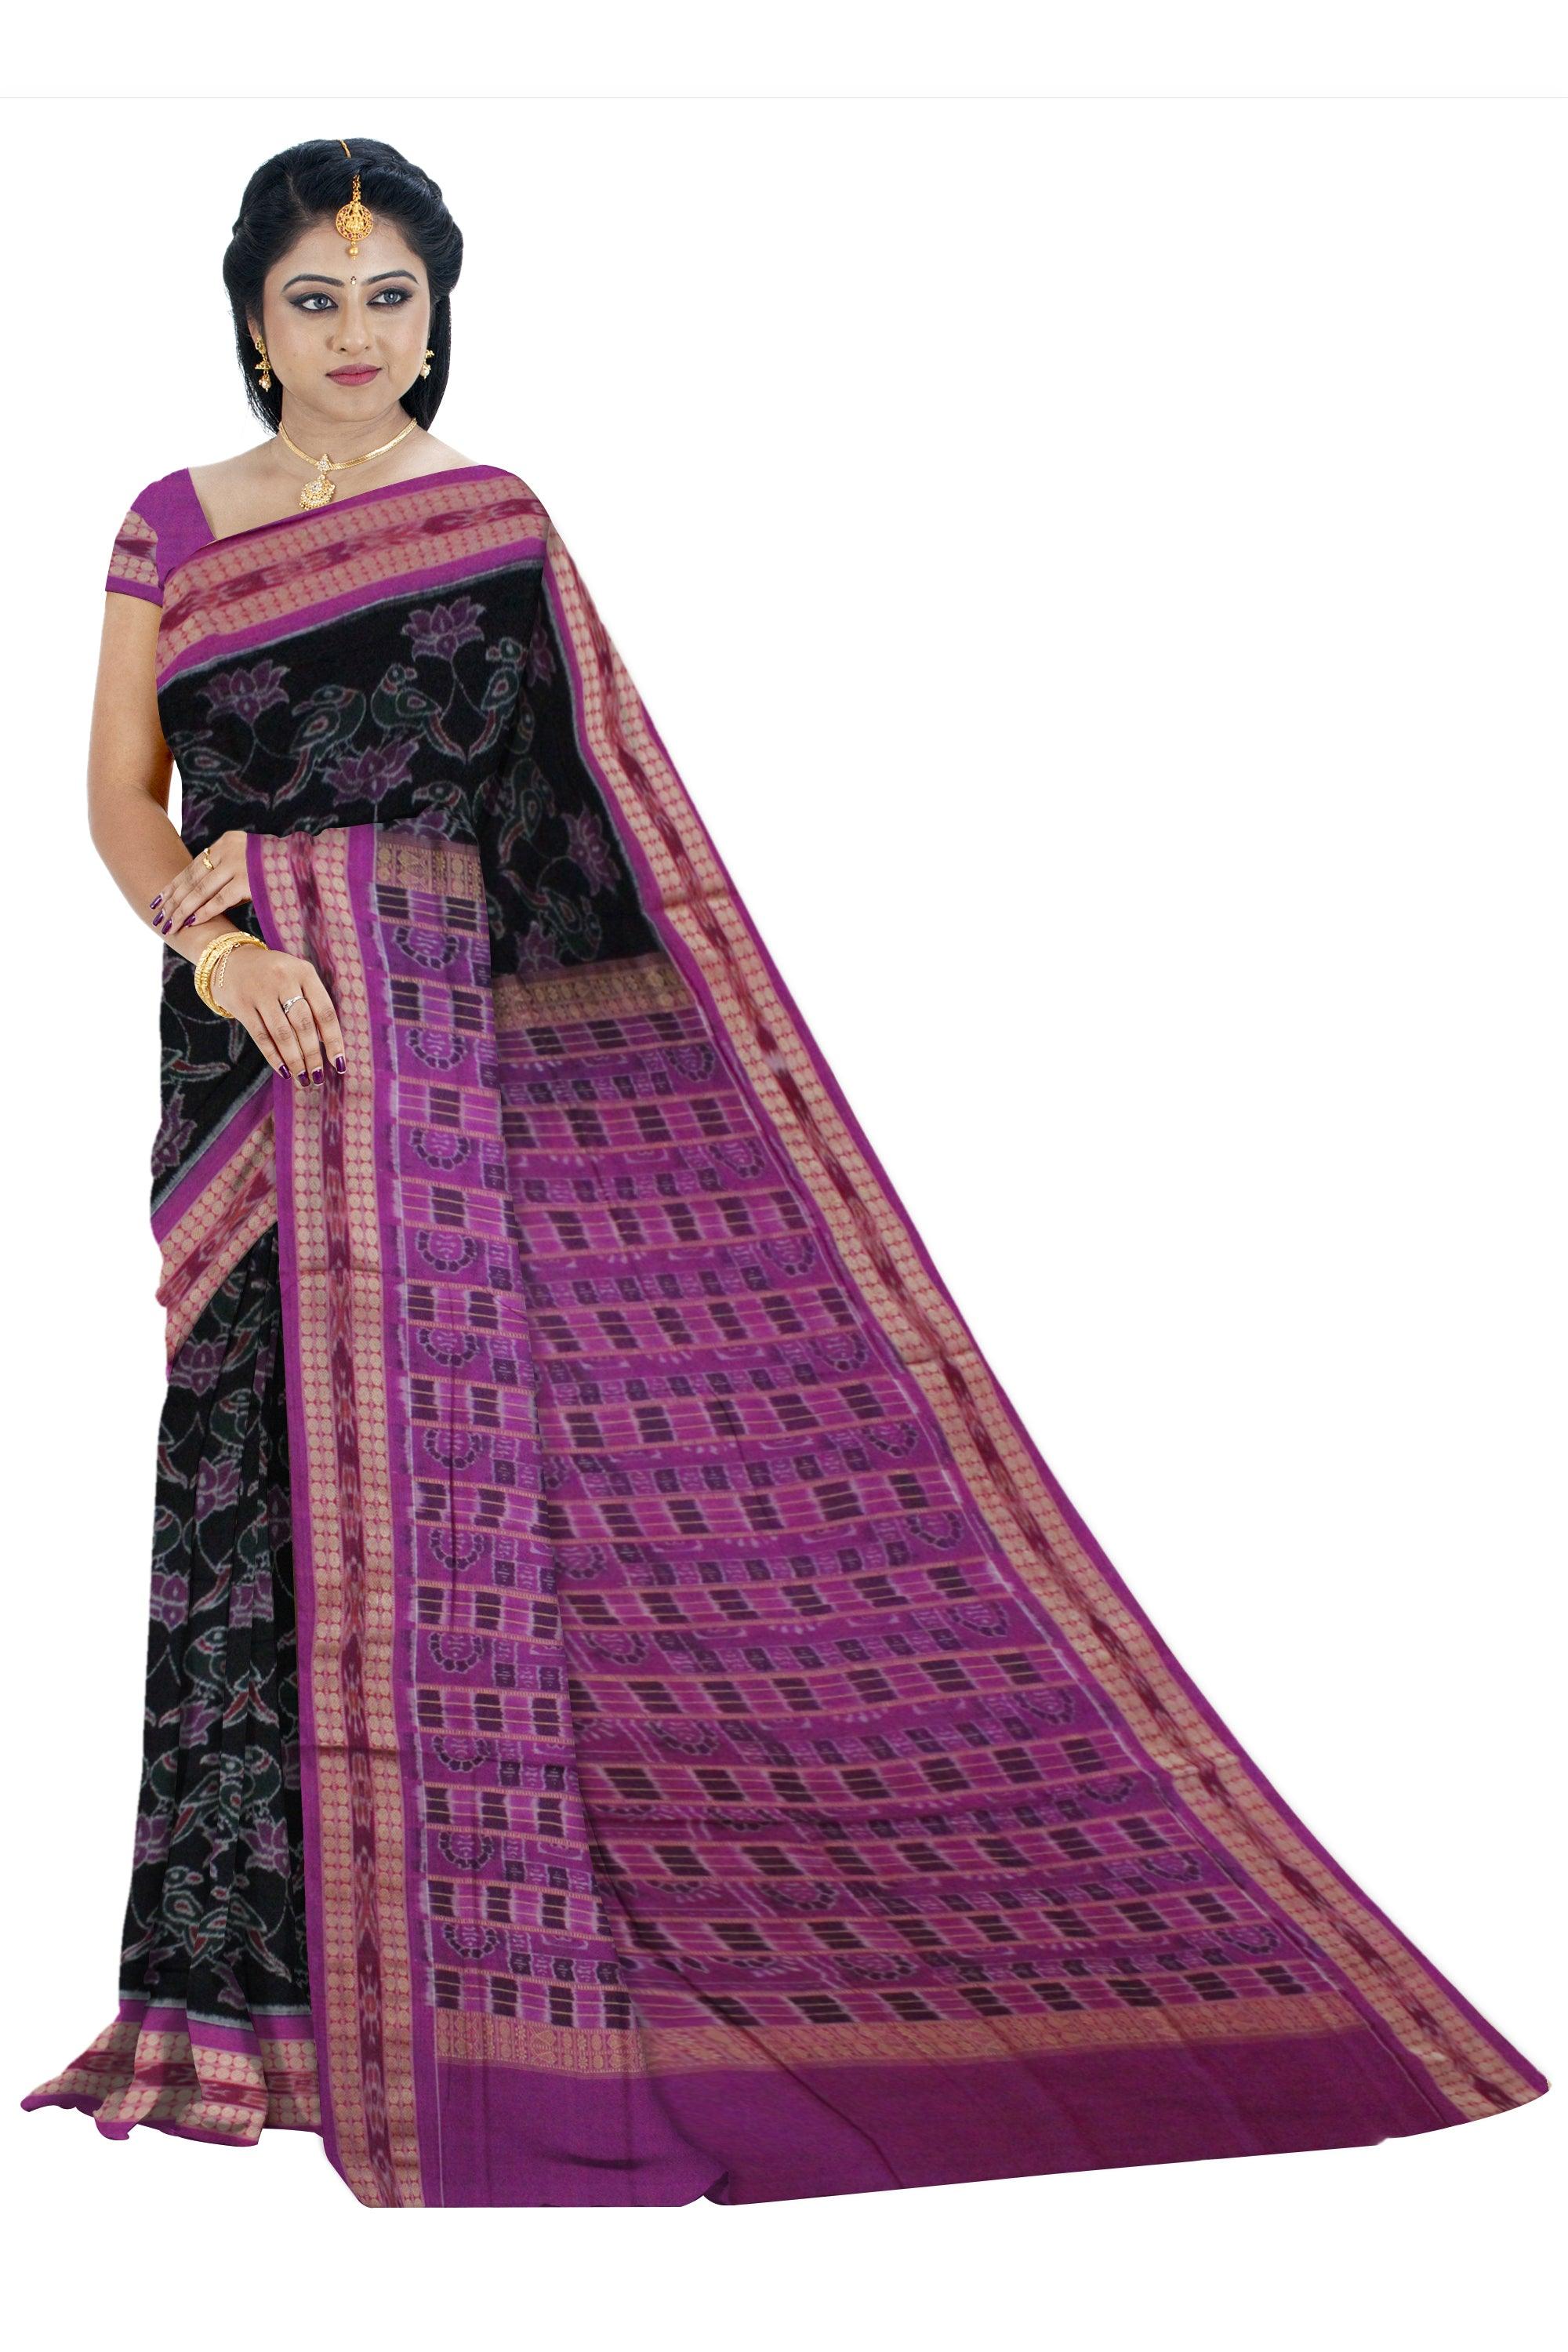 Lotus and Parrot  design Sambalpuri cotton saree  in  Black  color. - Koshali Arts & Crafts Enterprise